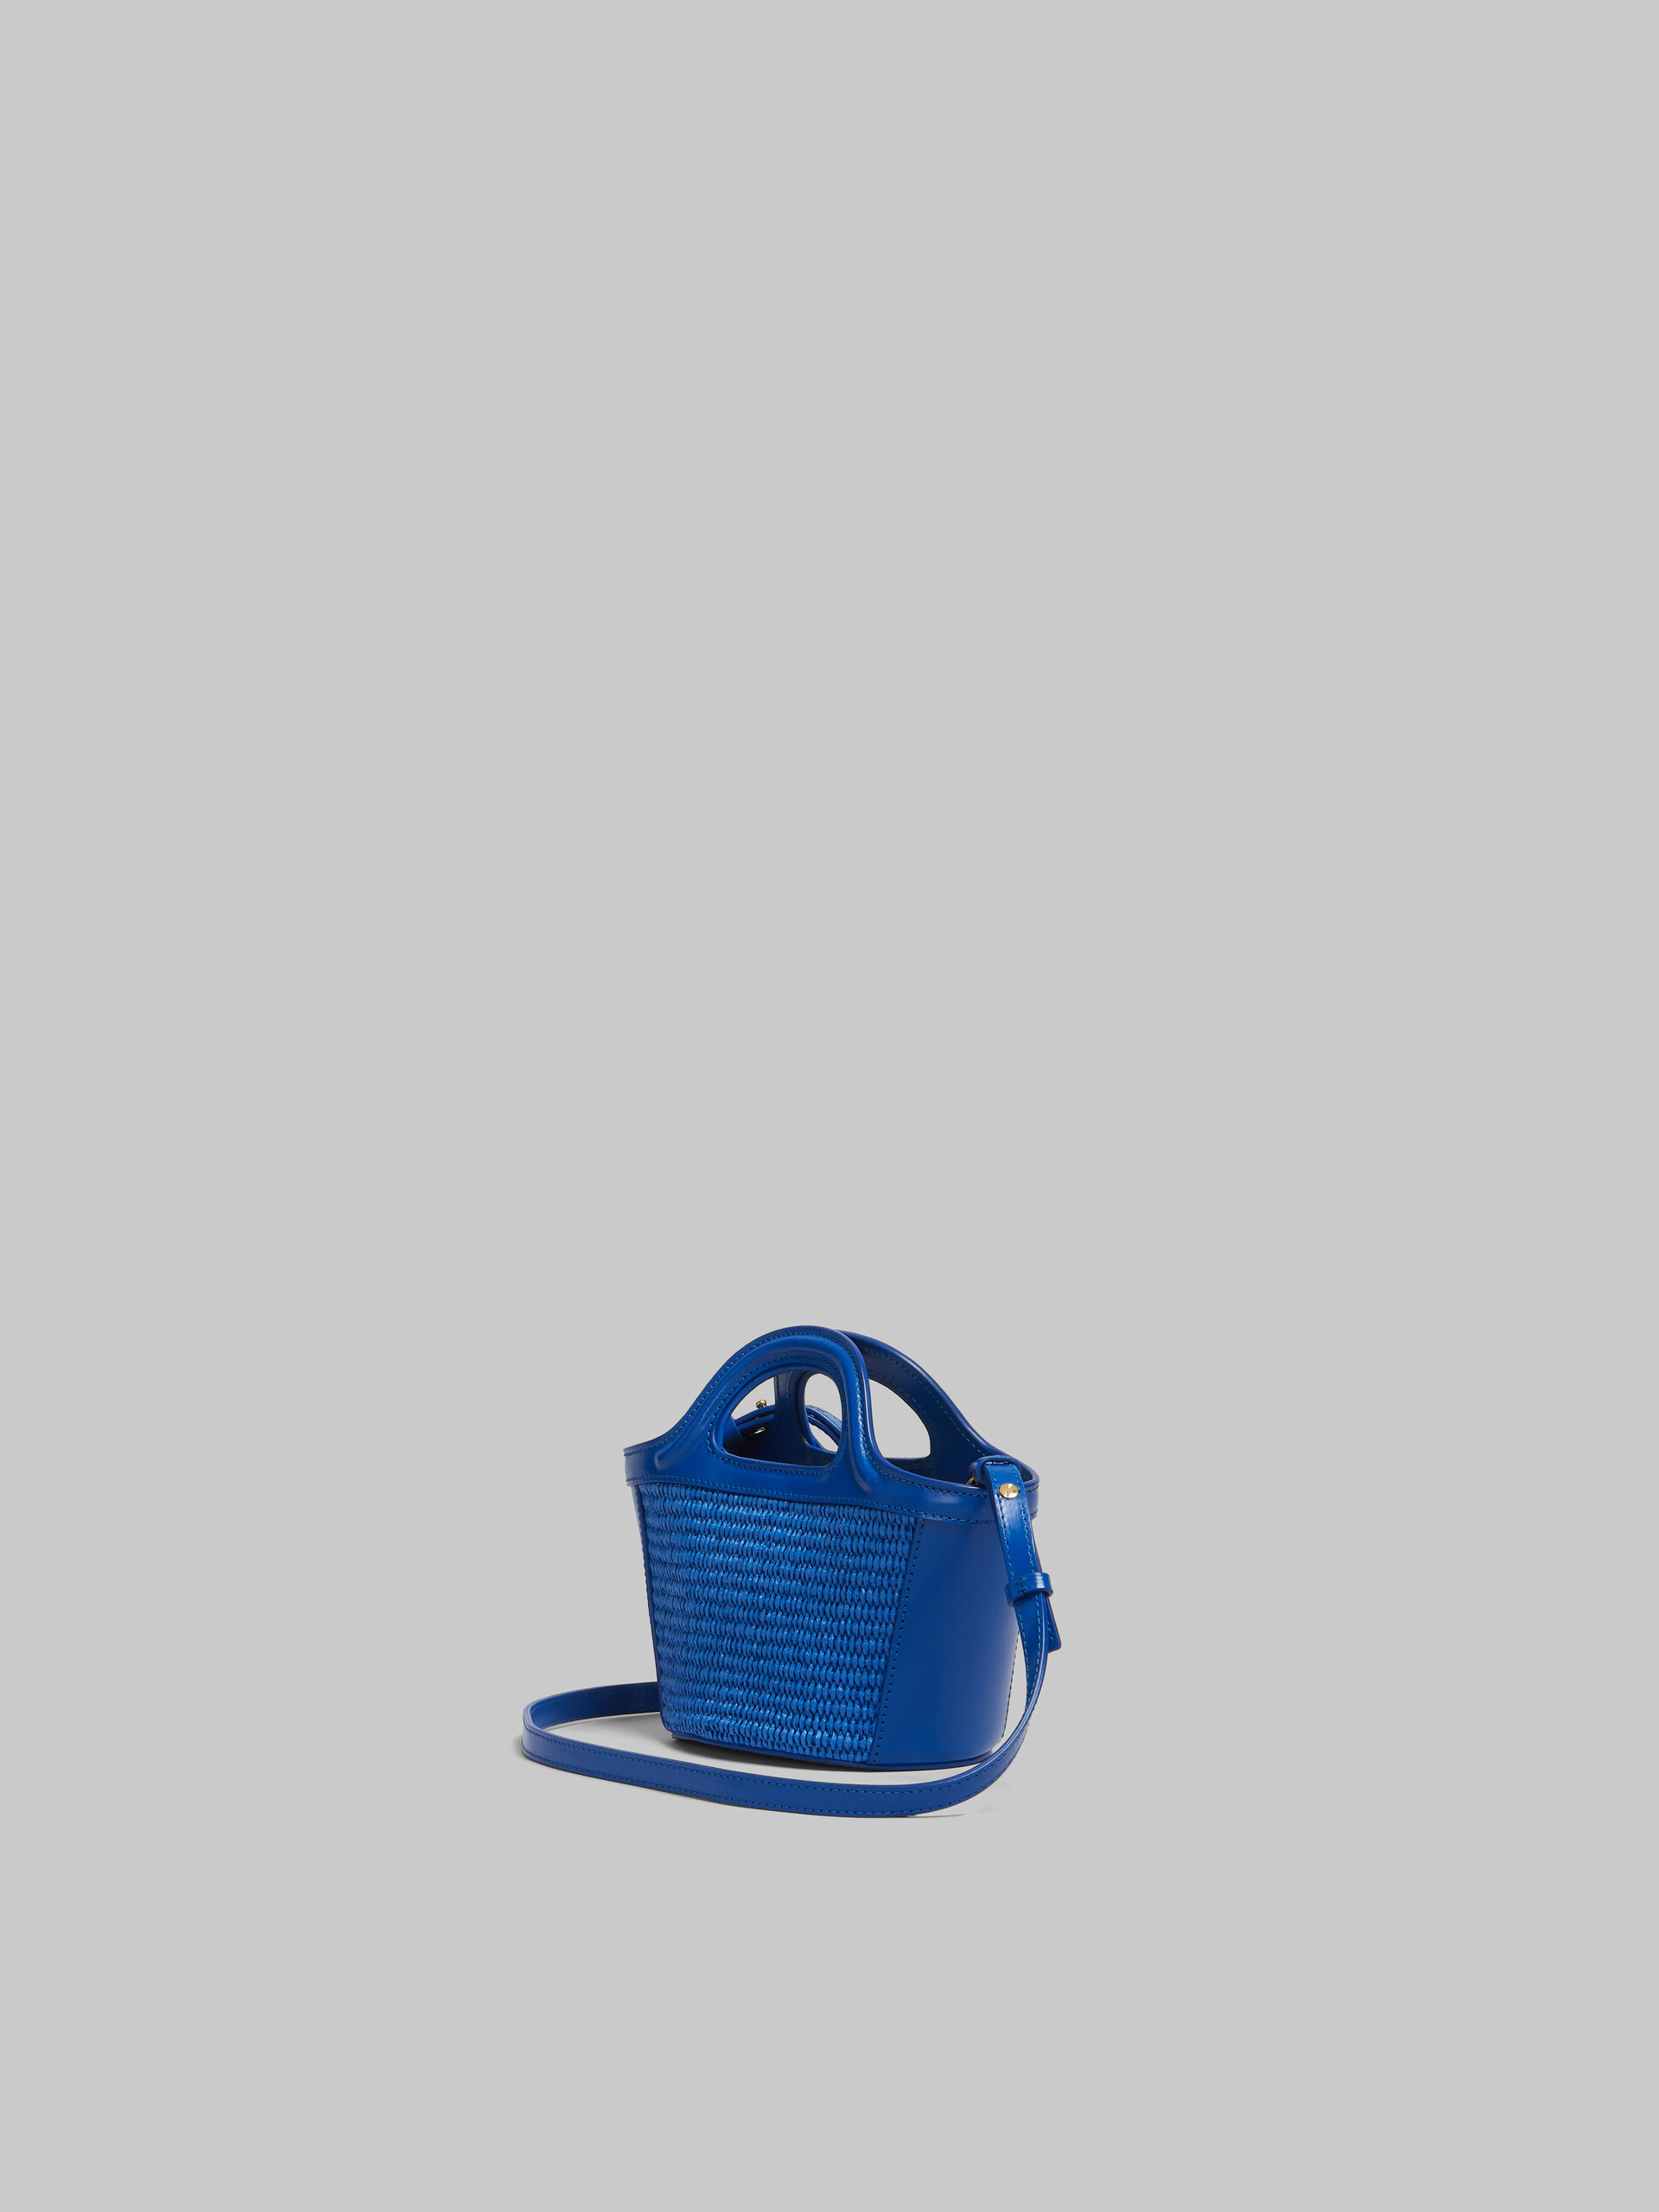 Tropicalia Micro Bag in light blue leather and raffia-effect fabric - Handbags - Image 3